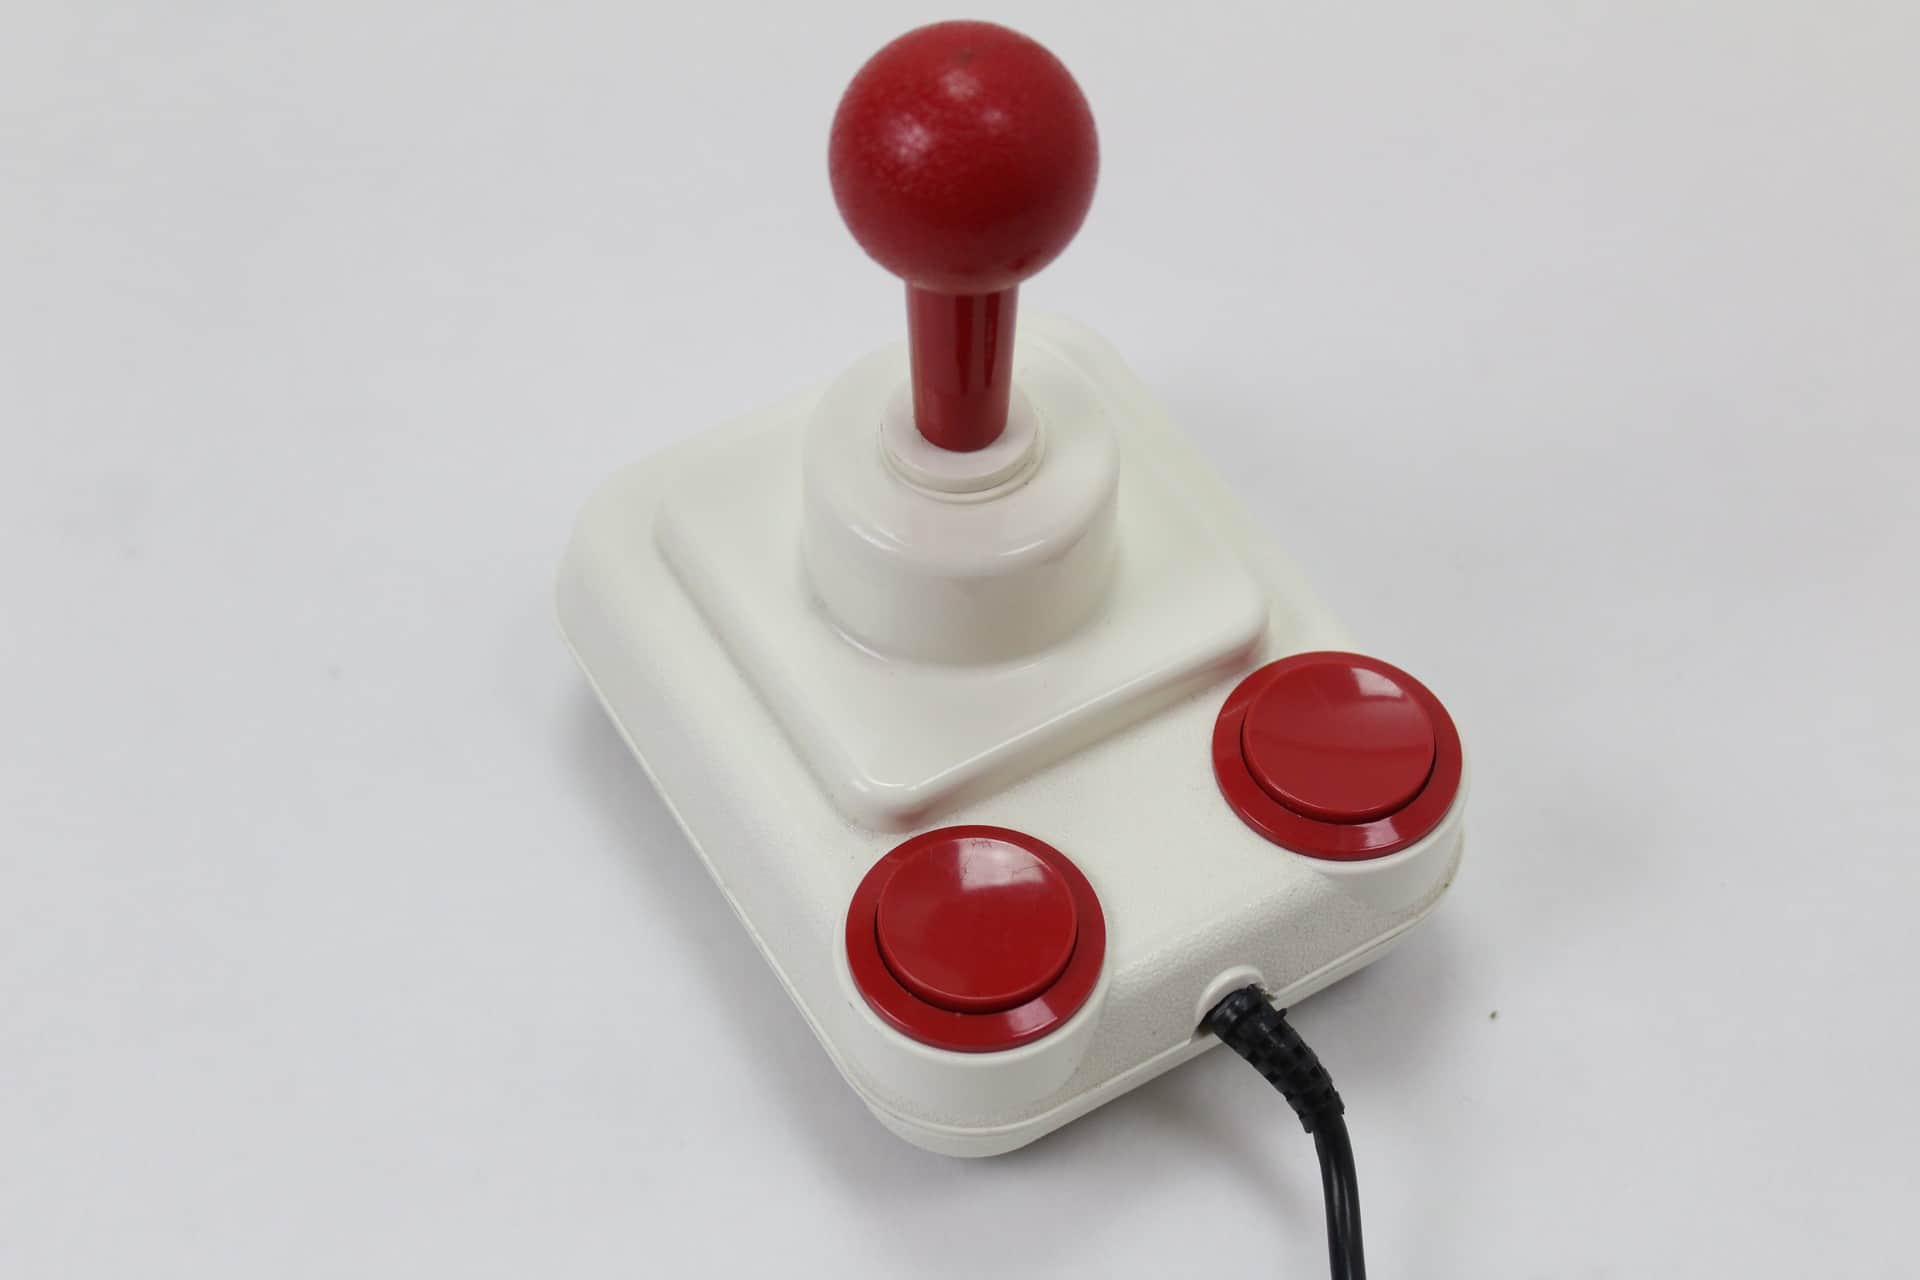 Commodore Amiga 600 - joystick